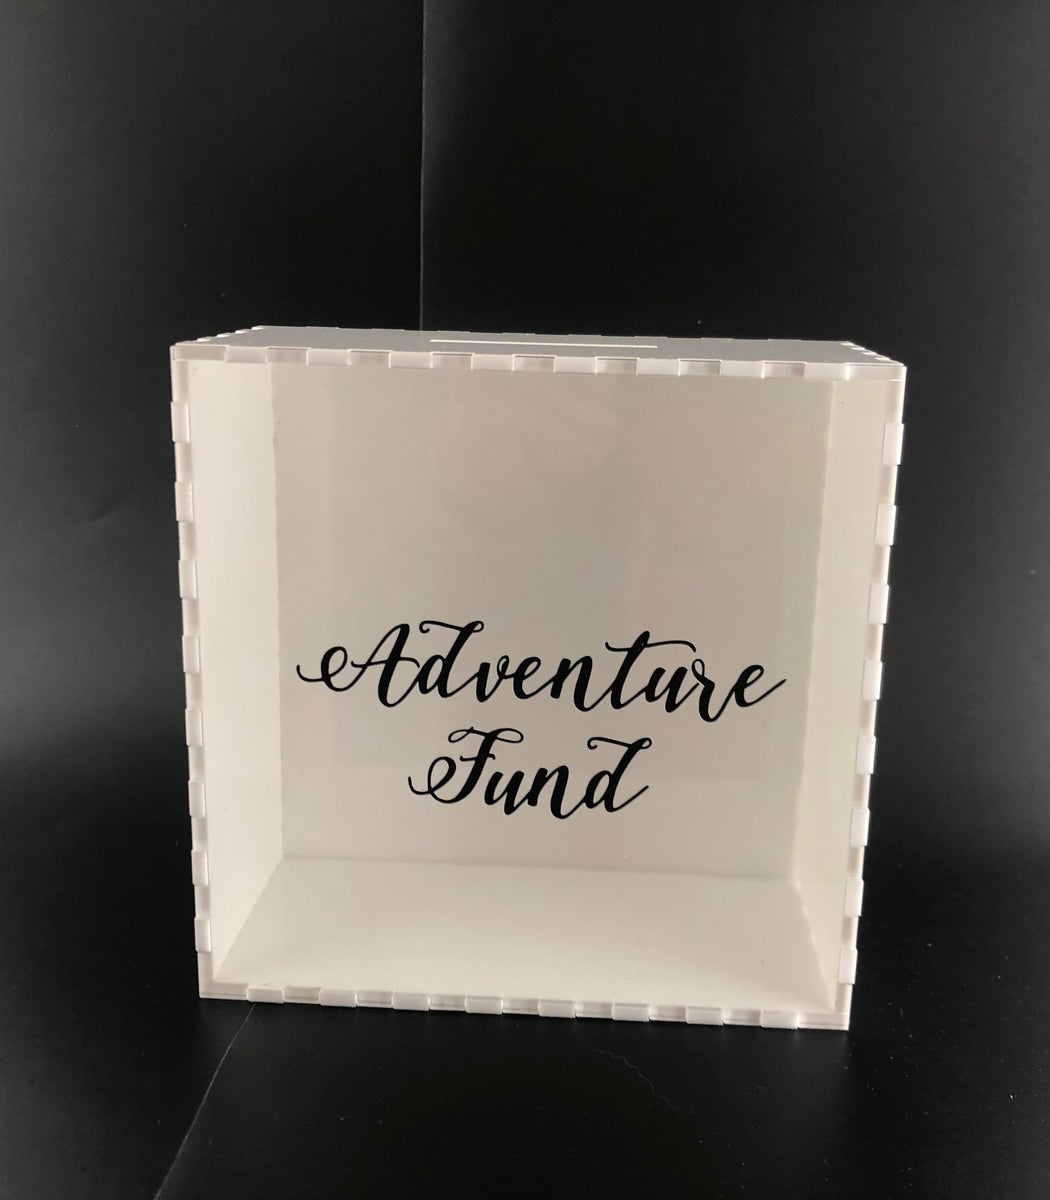 Adventure Fund Box